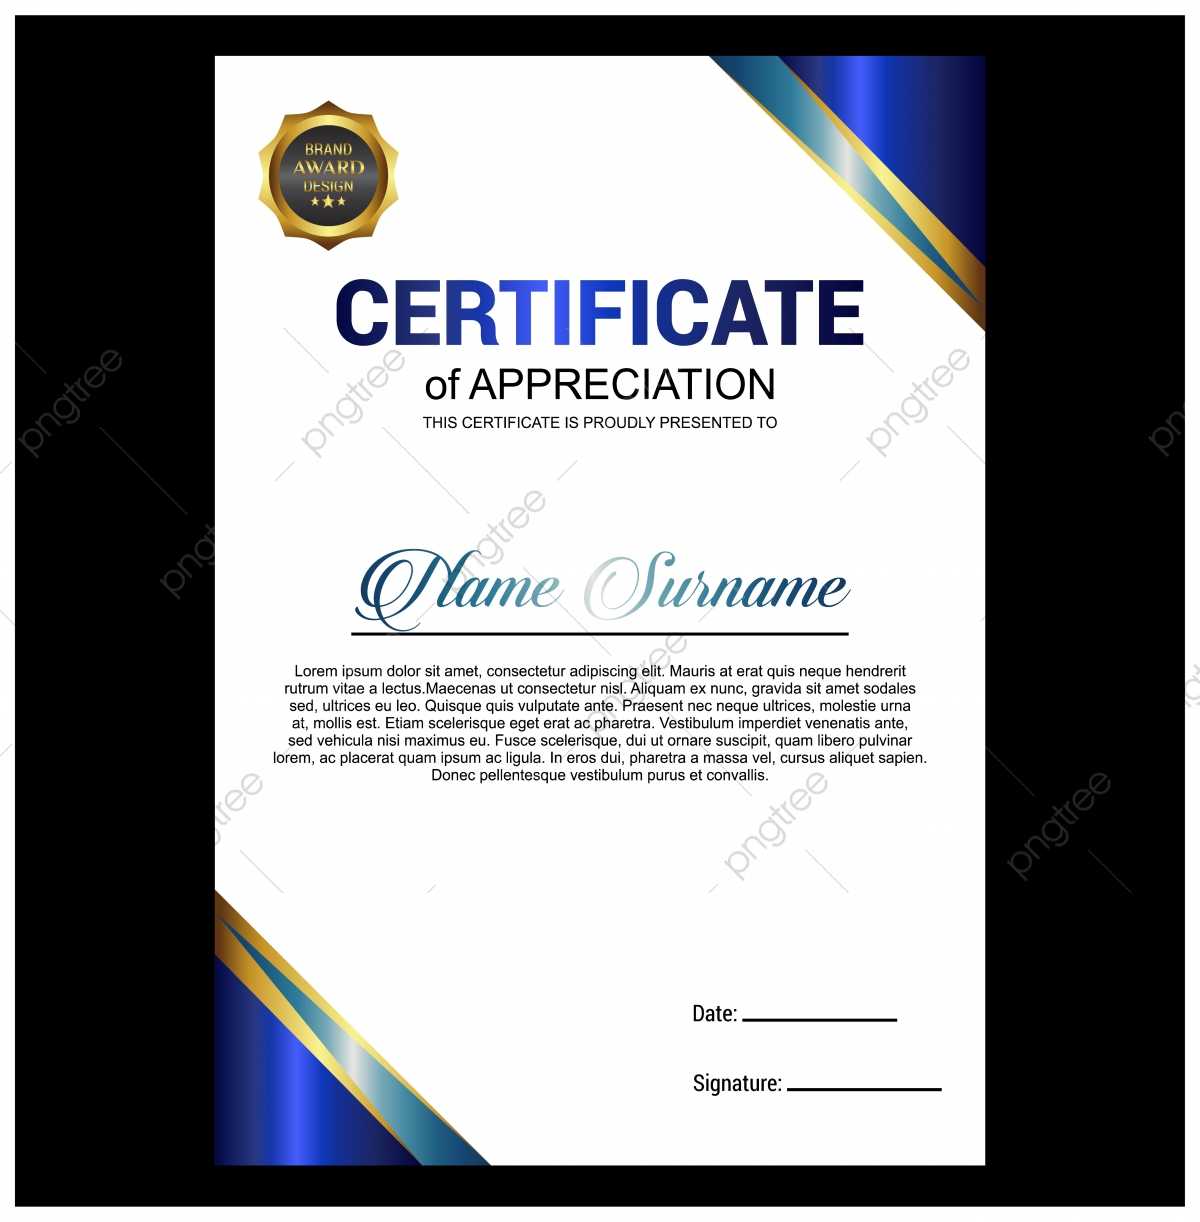 Creative Certificate Of Appreciation Award Template With In Certificate Of License Template